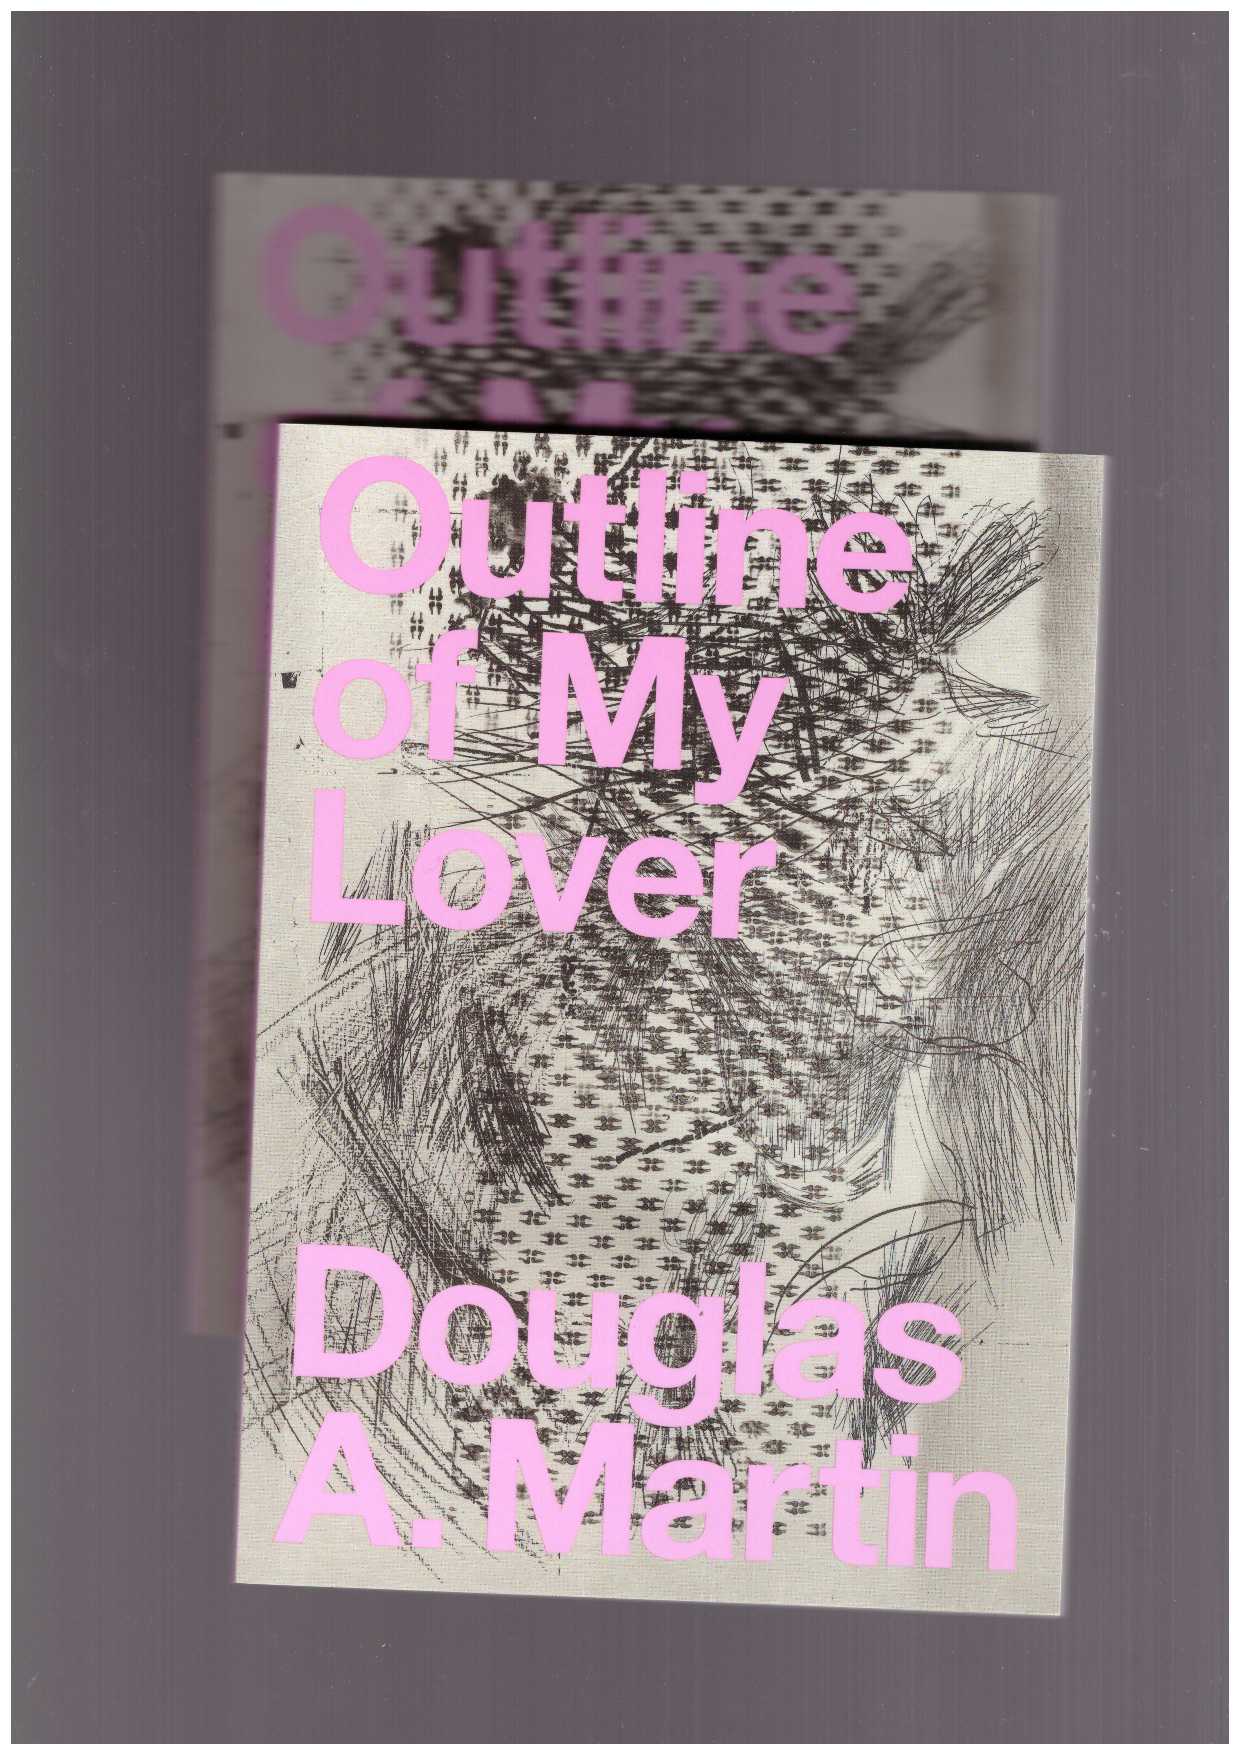 MARTIN, Douglas A. - Outline of My Lover